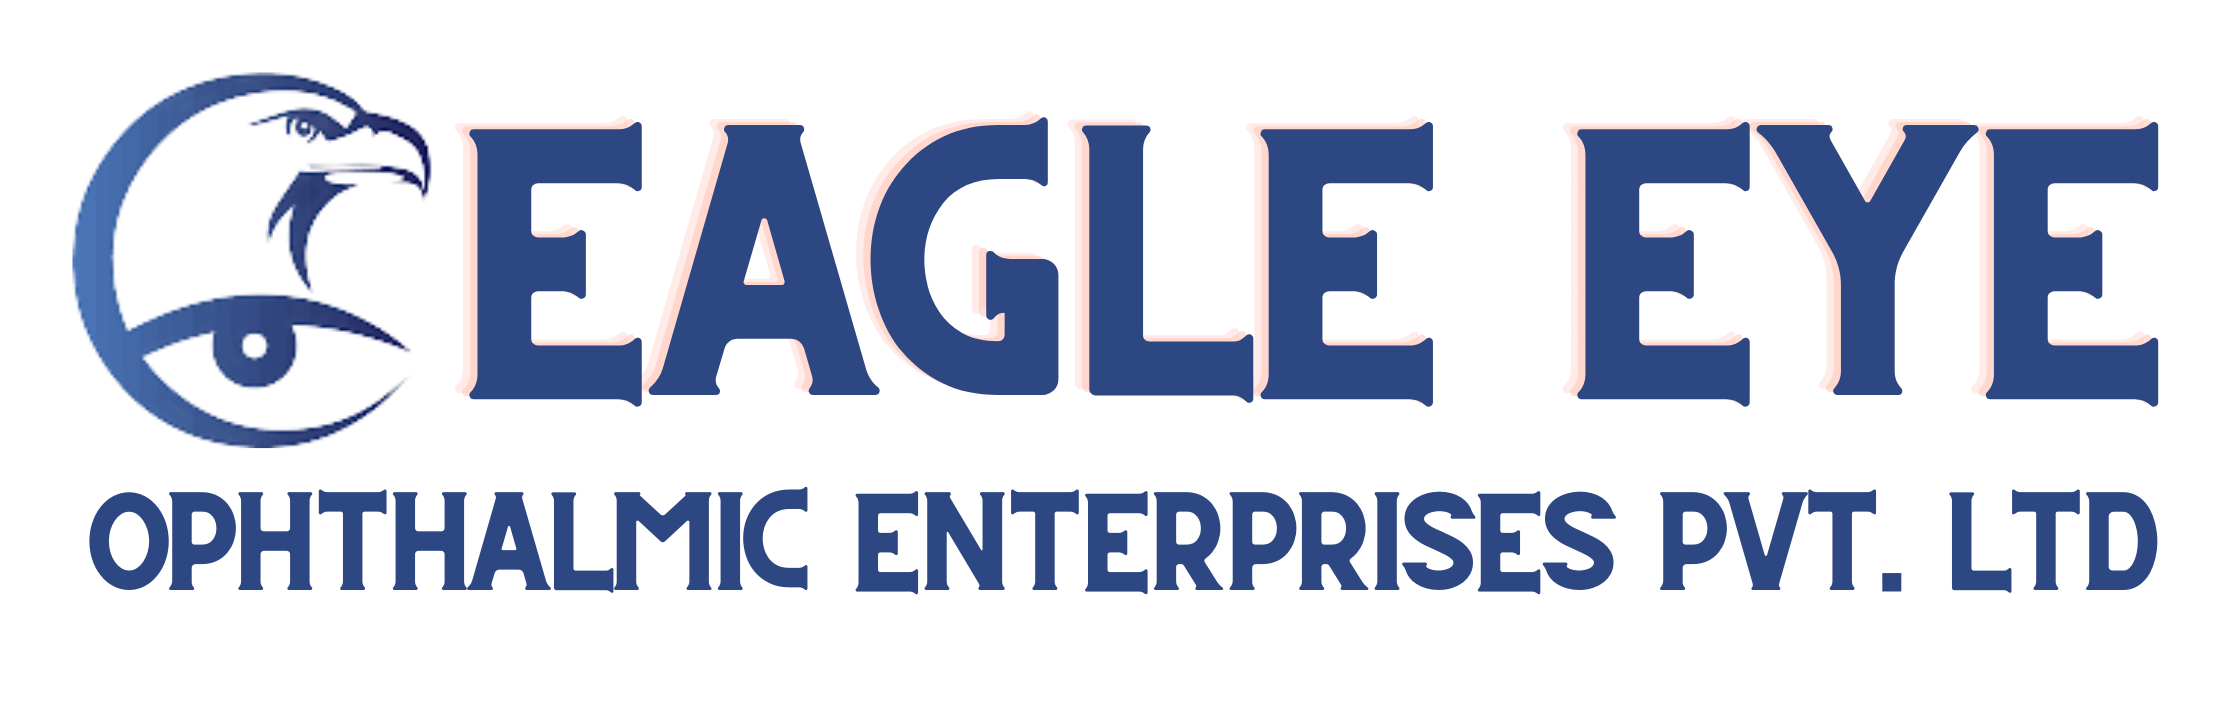 Eagle Eye Ophthalmic Enterprises